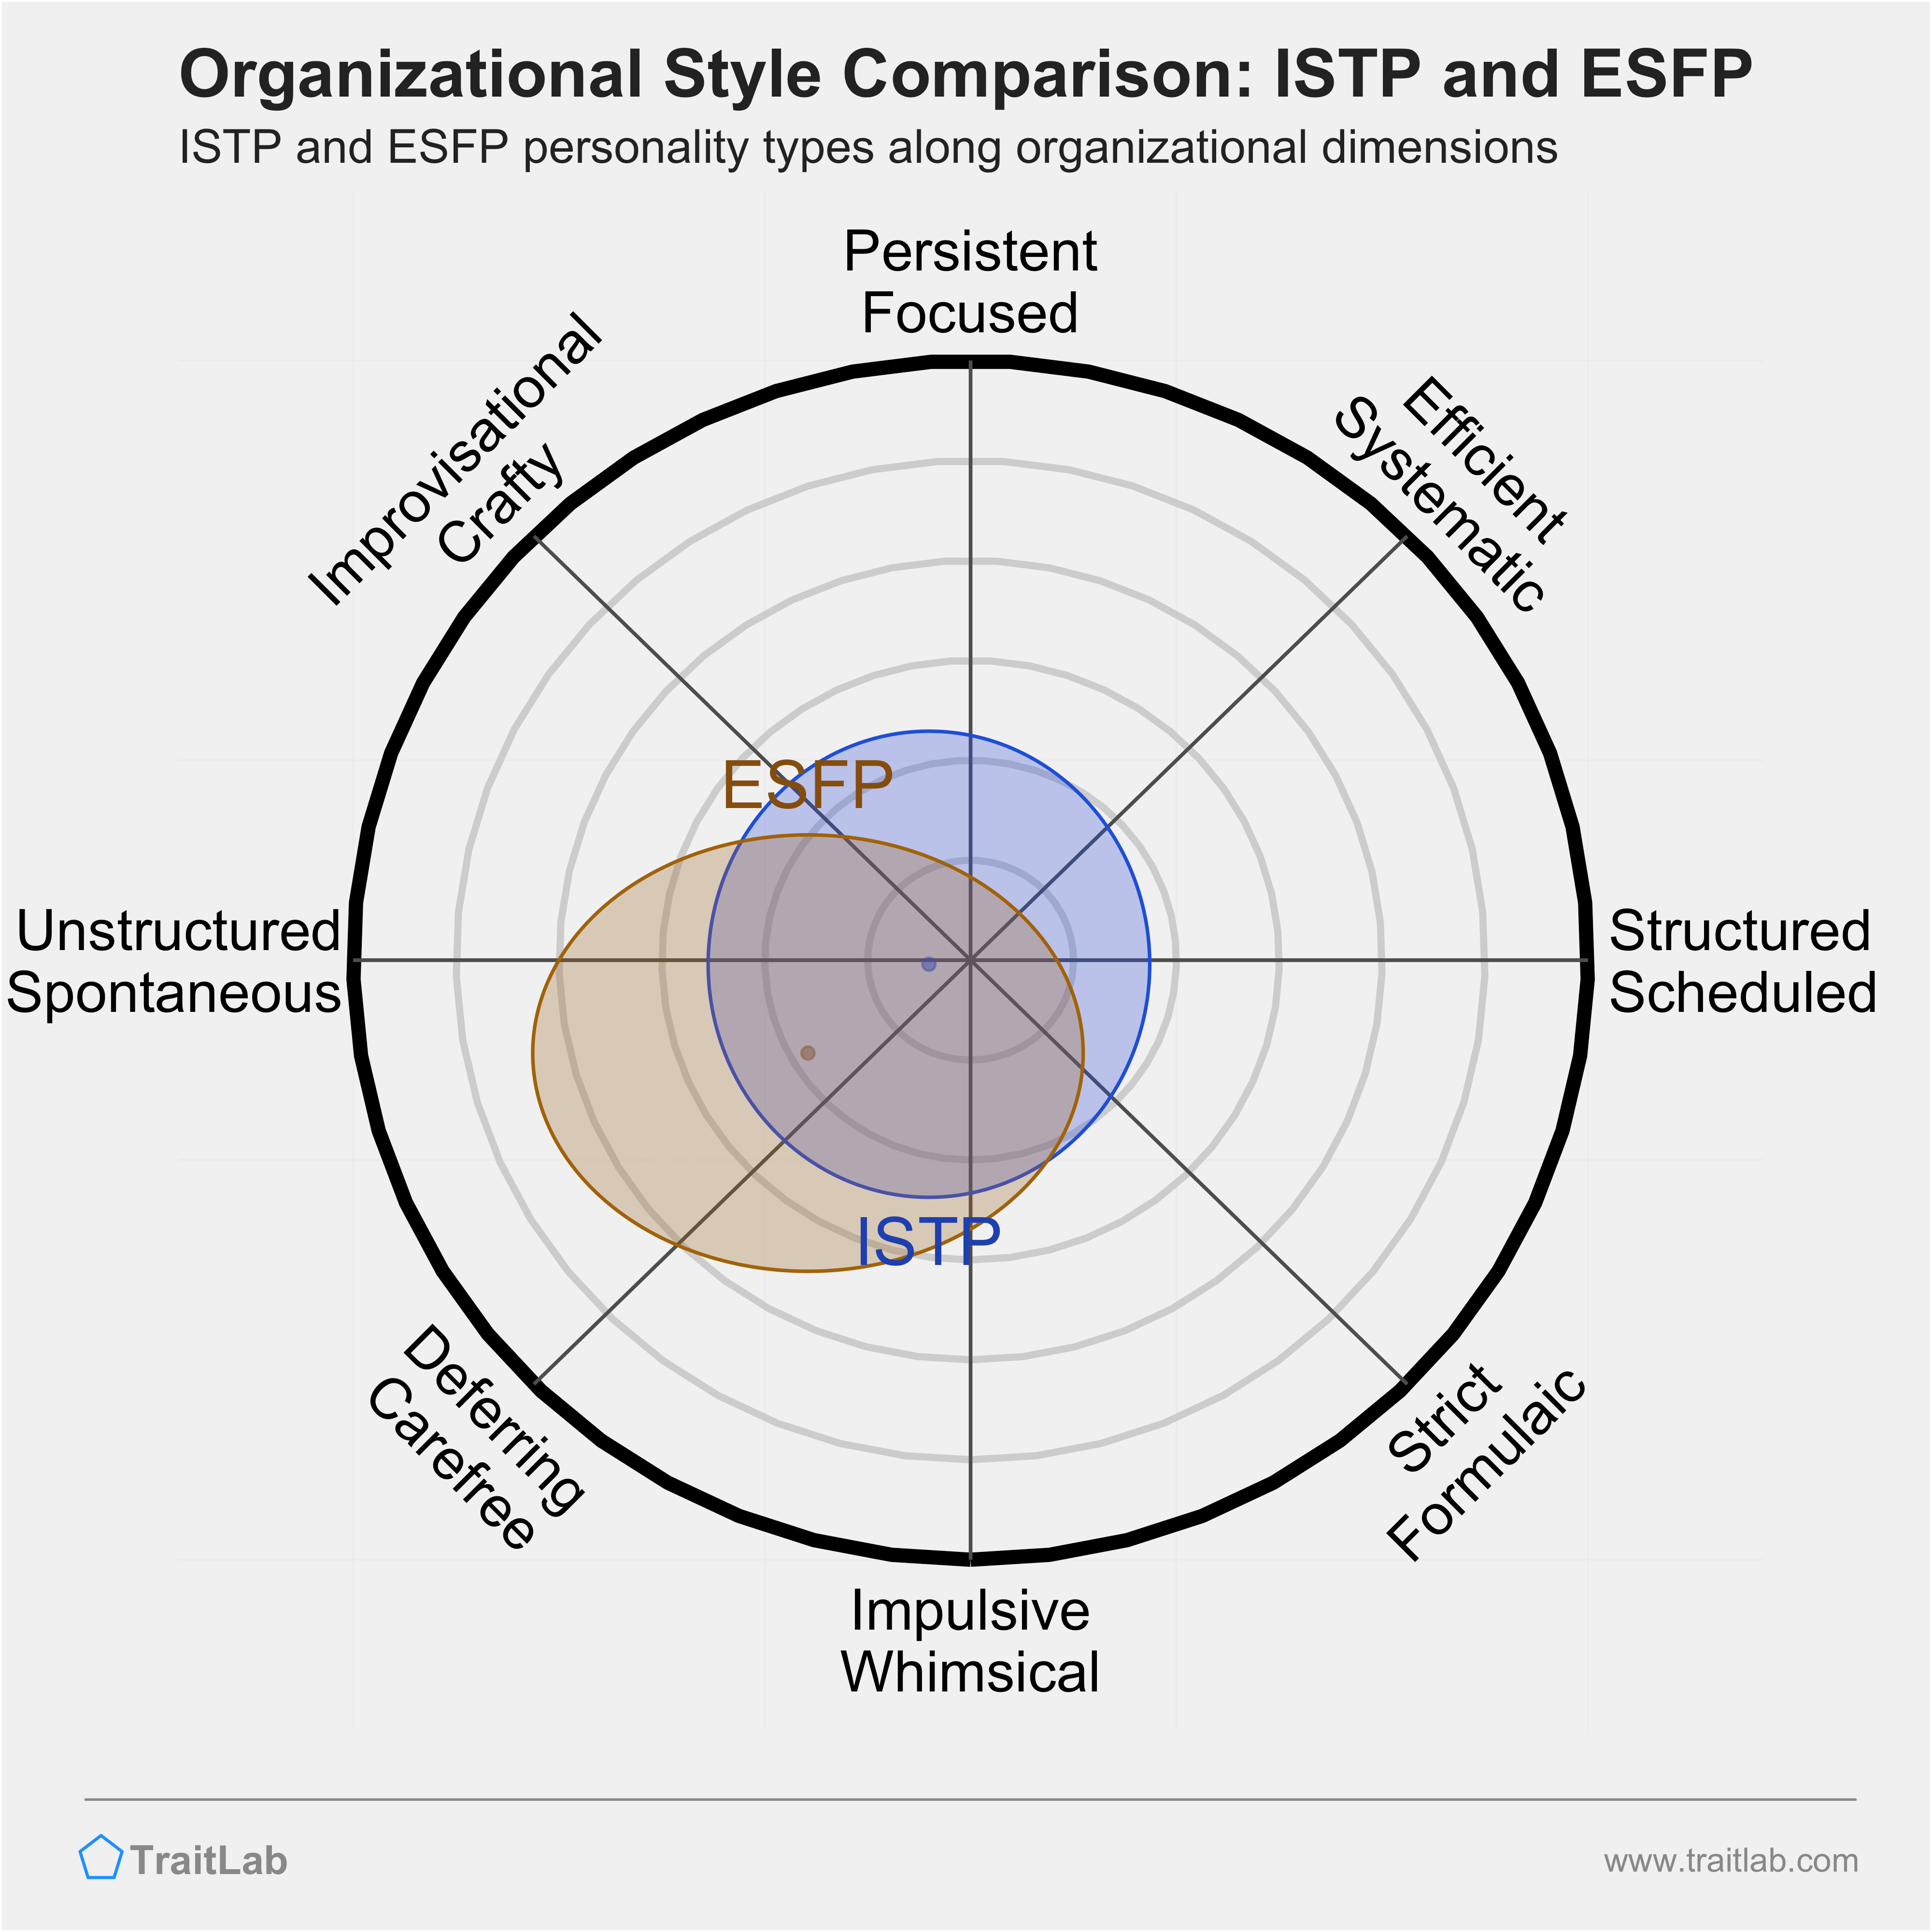 ISTP and ESFP comparison across organizational dimensions